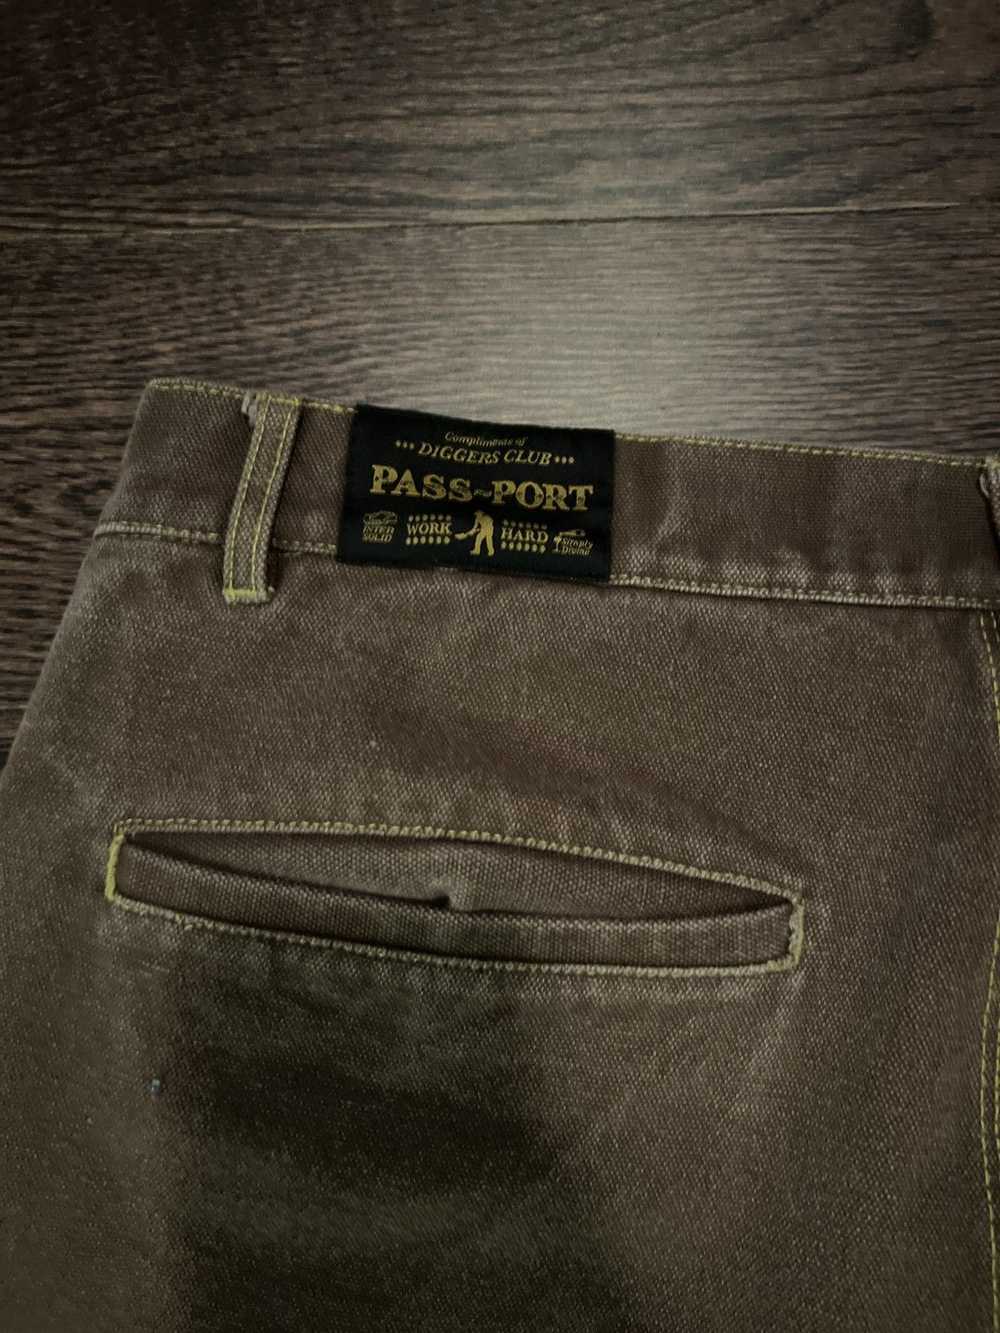 Passport Passport Diggers club work pants (Gold c… - image 3